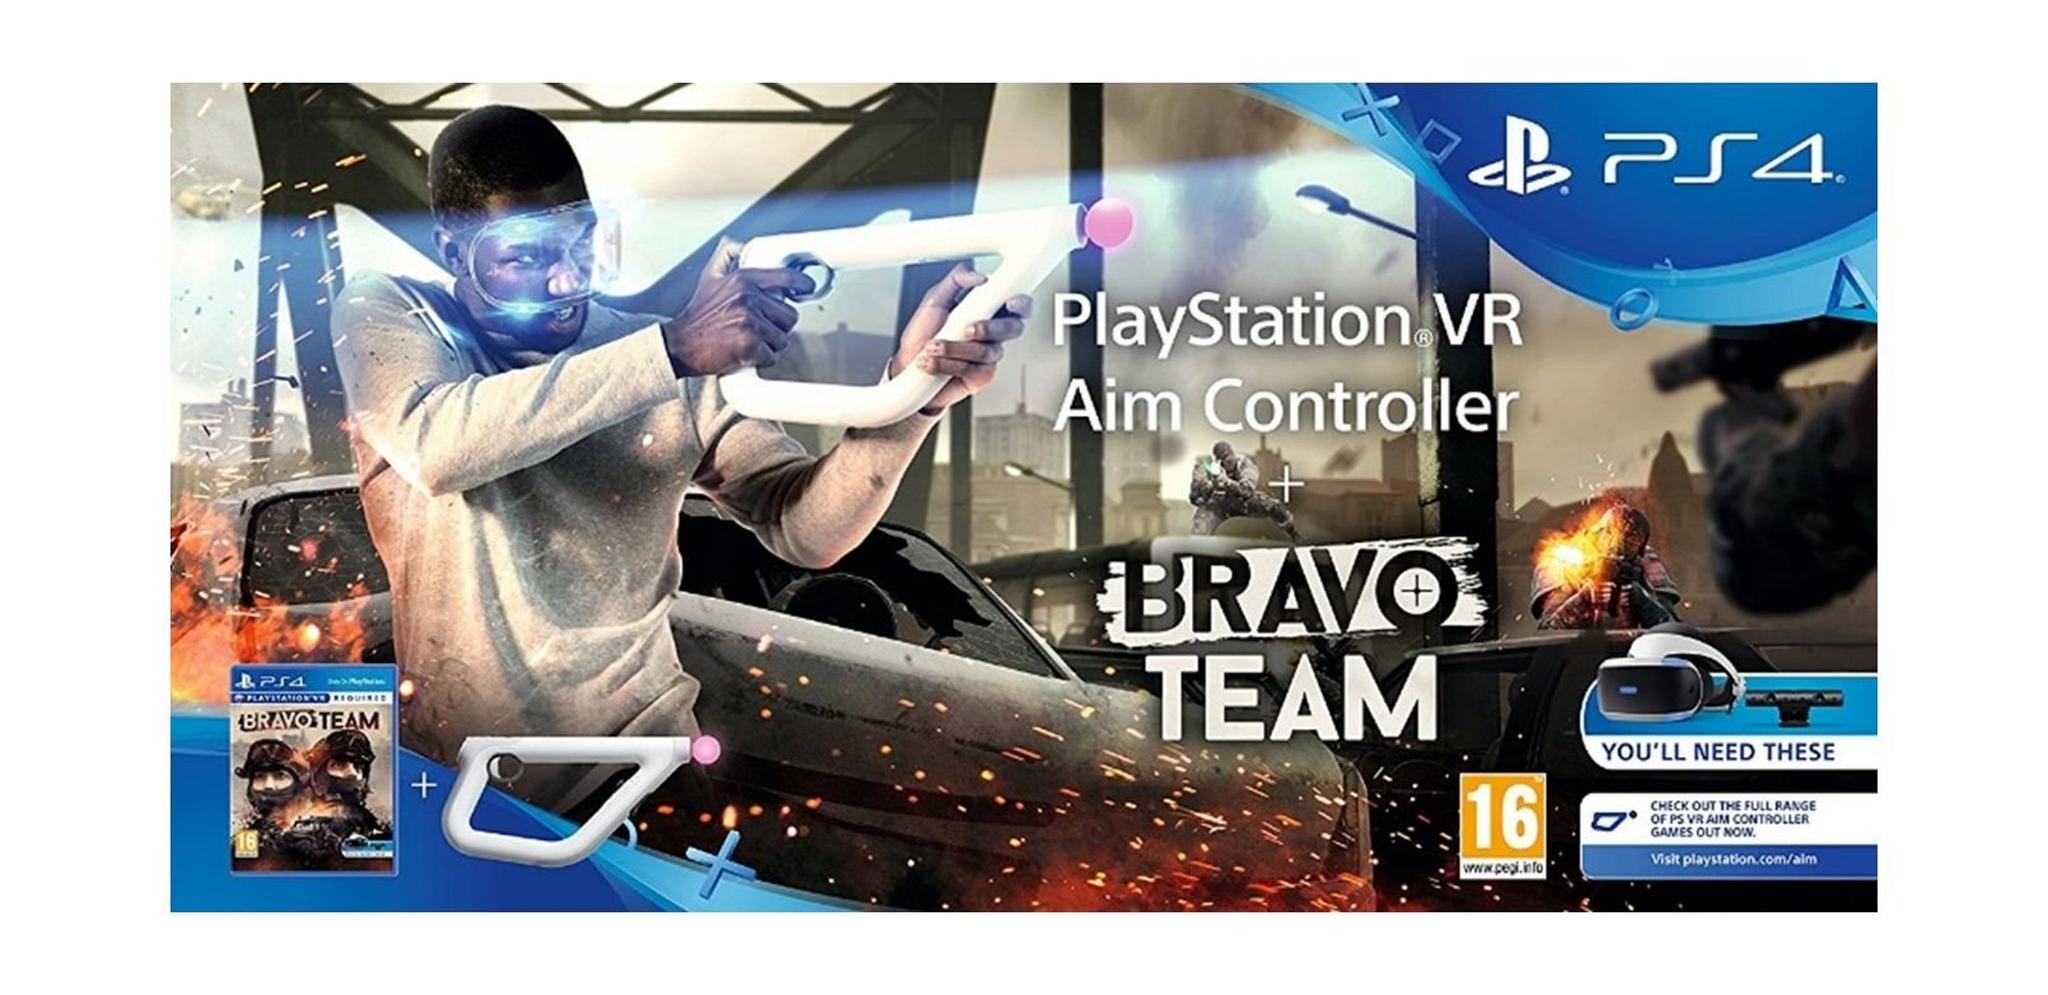 Bravo Team: PlayStation VR Game + Aim Controller